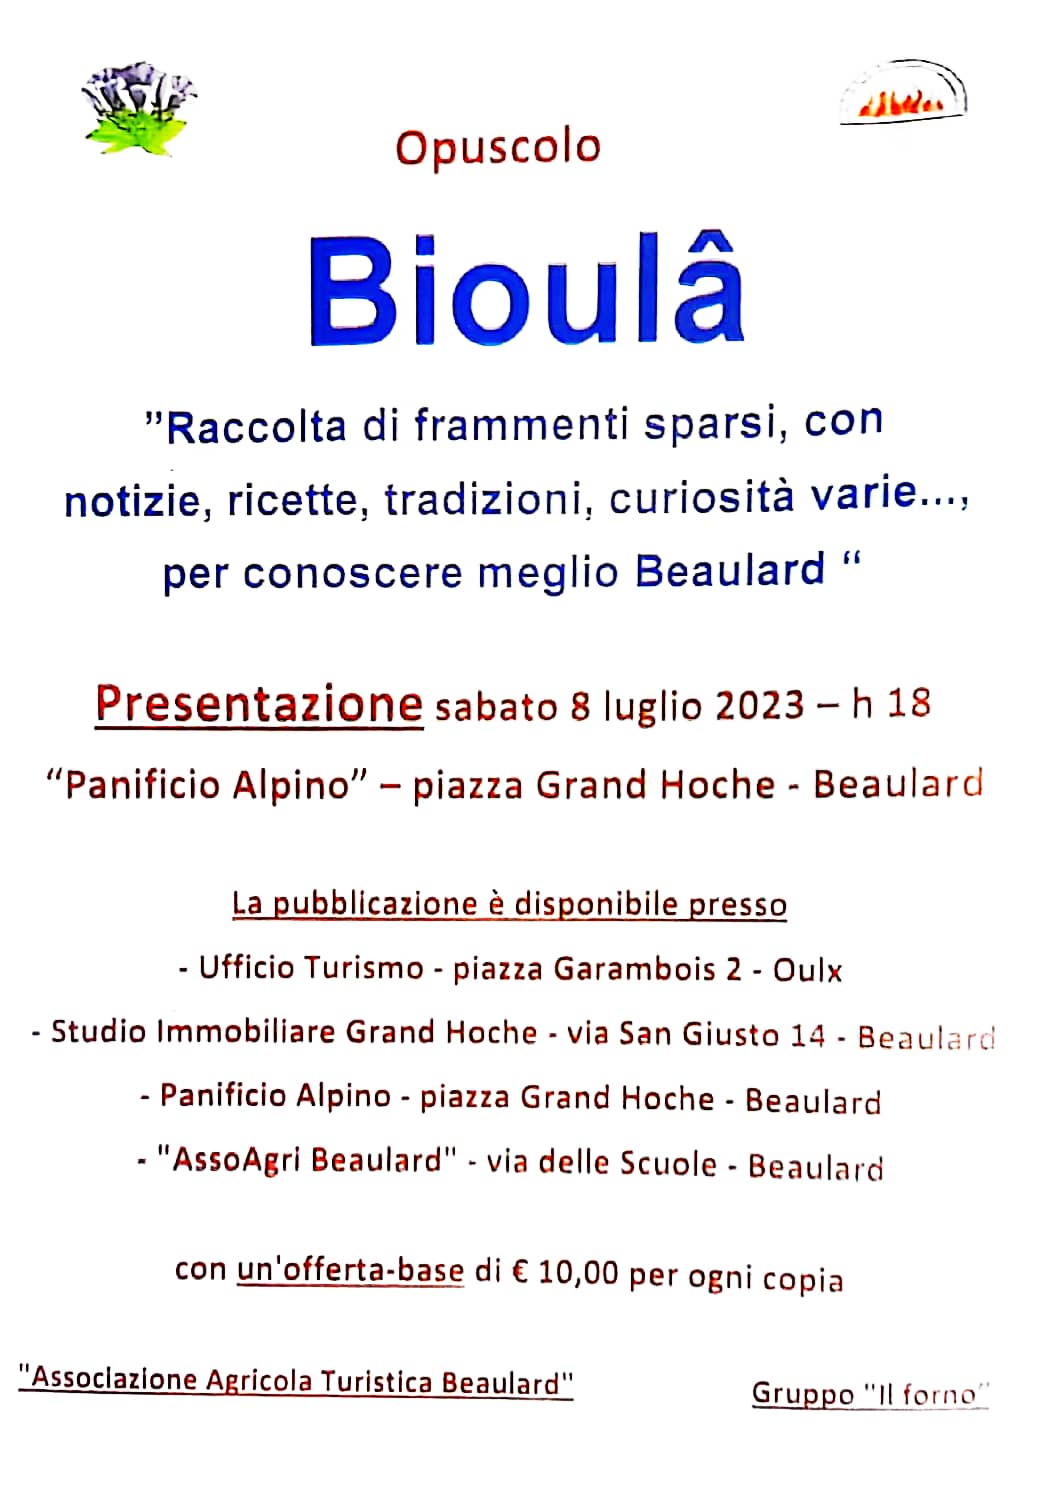 Presentazione opuscolo Bioula